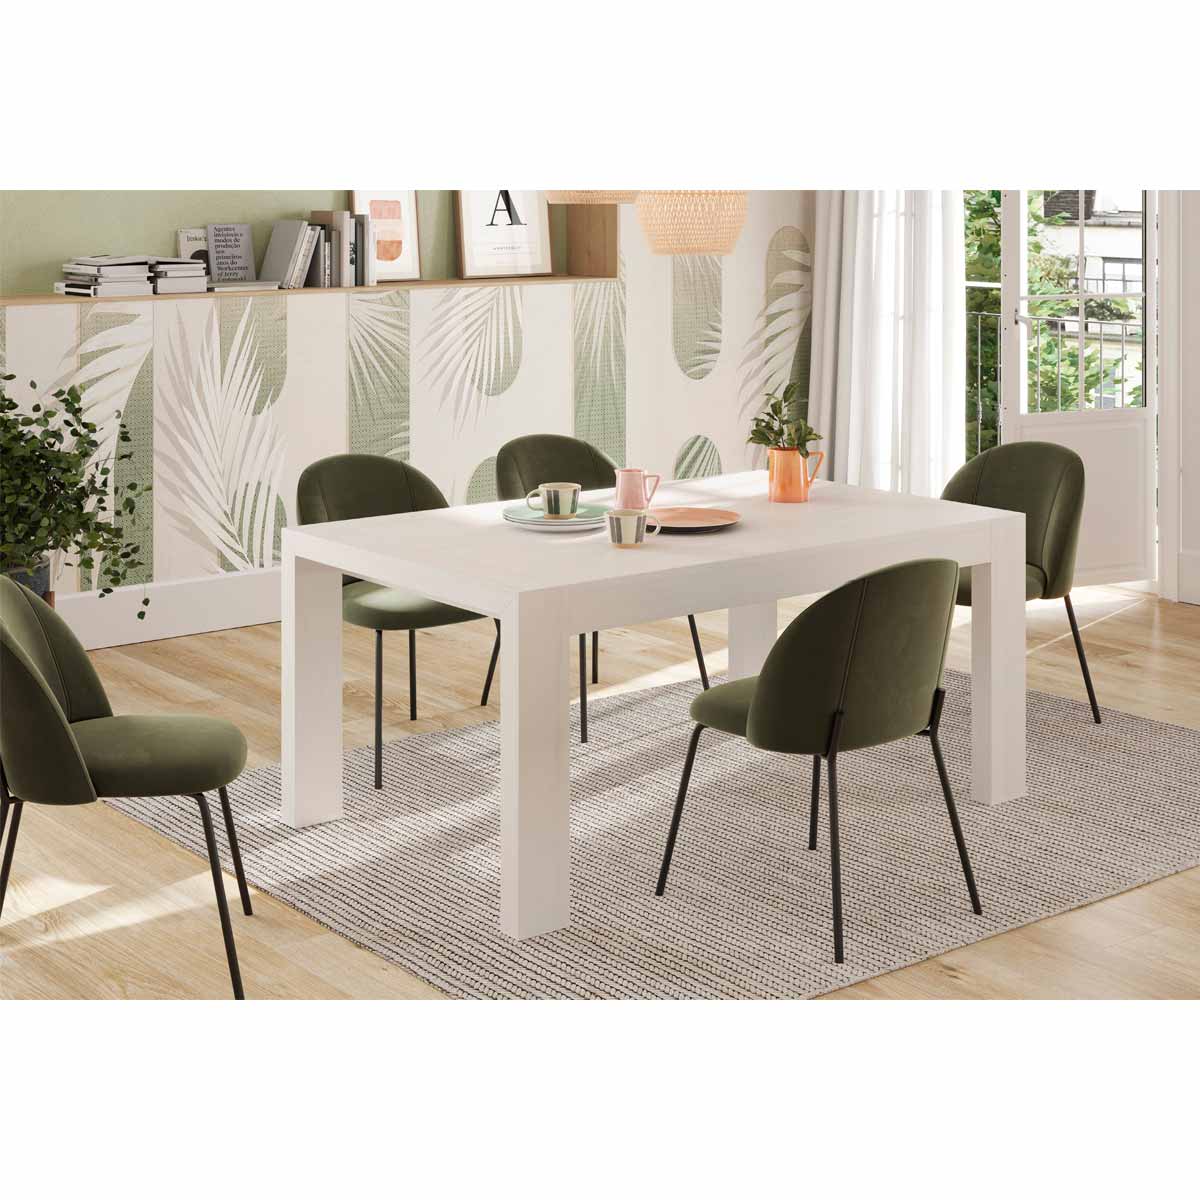 Mesa de comedor blanca extensible ROMAIN, Muebles comedor baratos